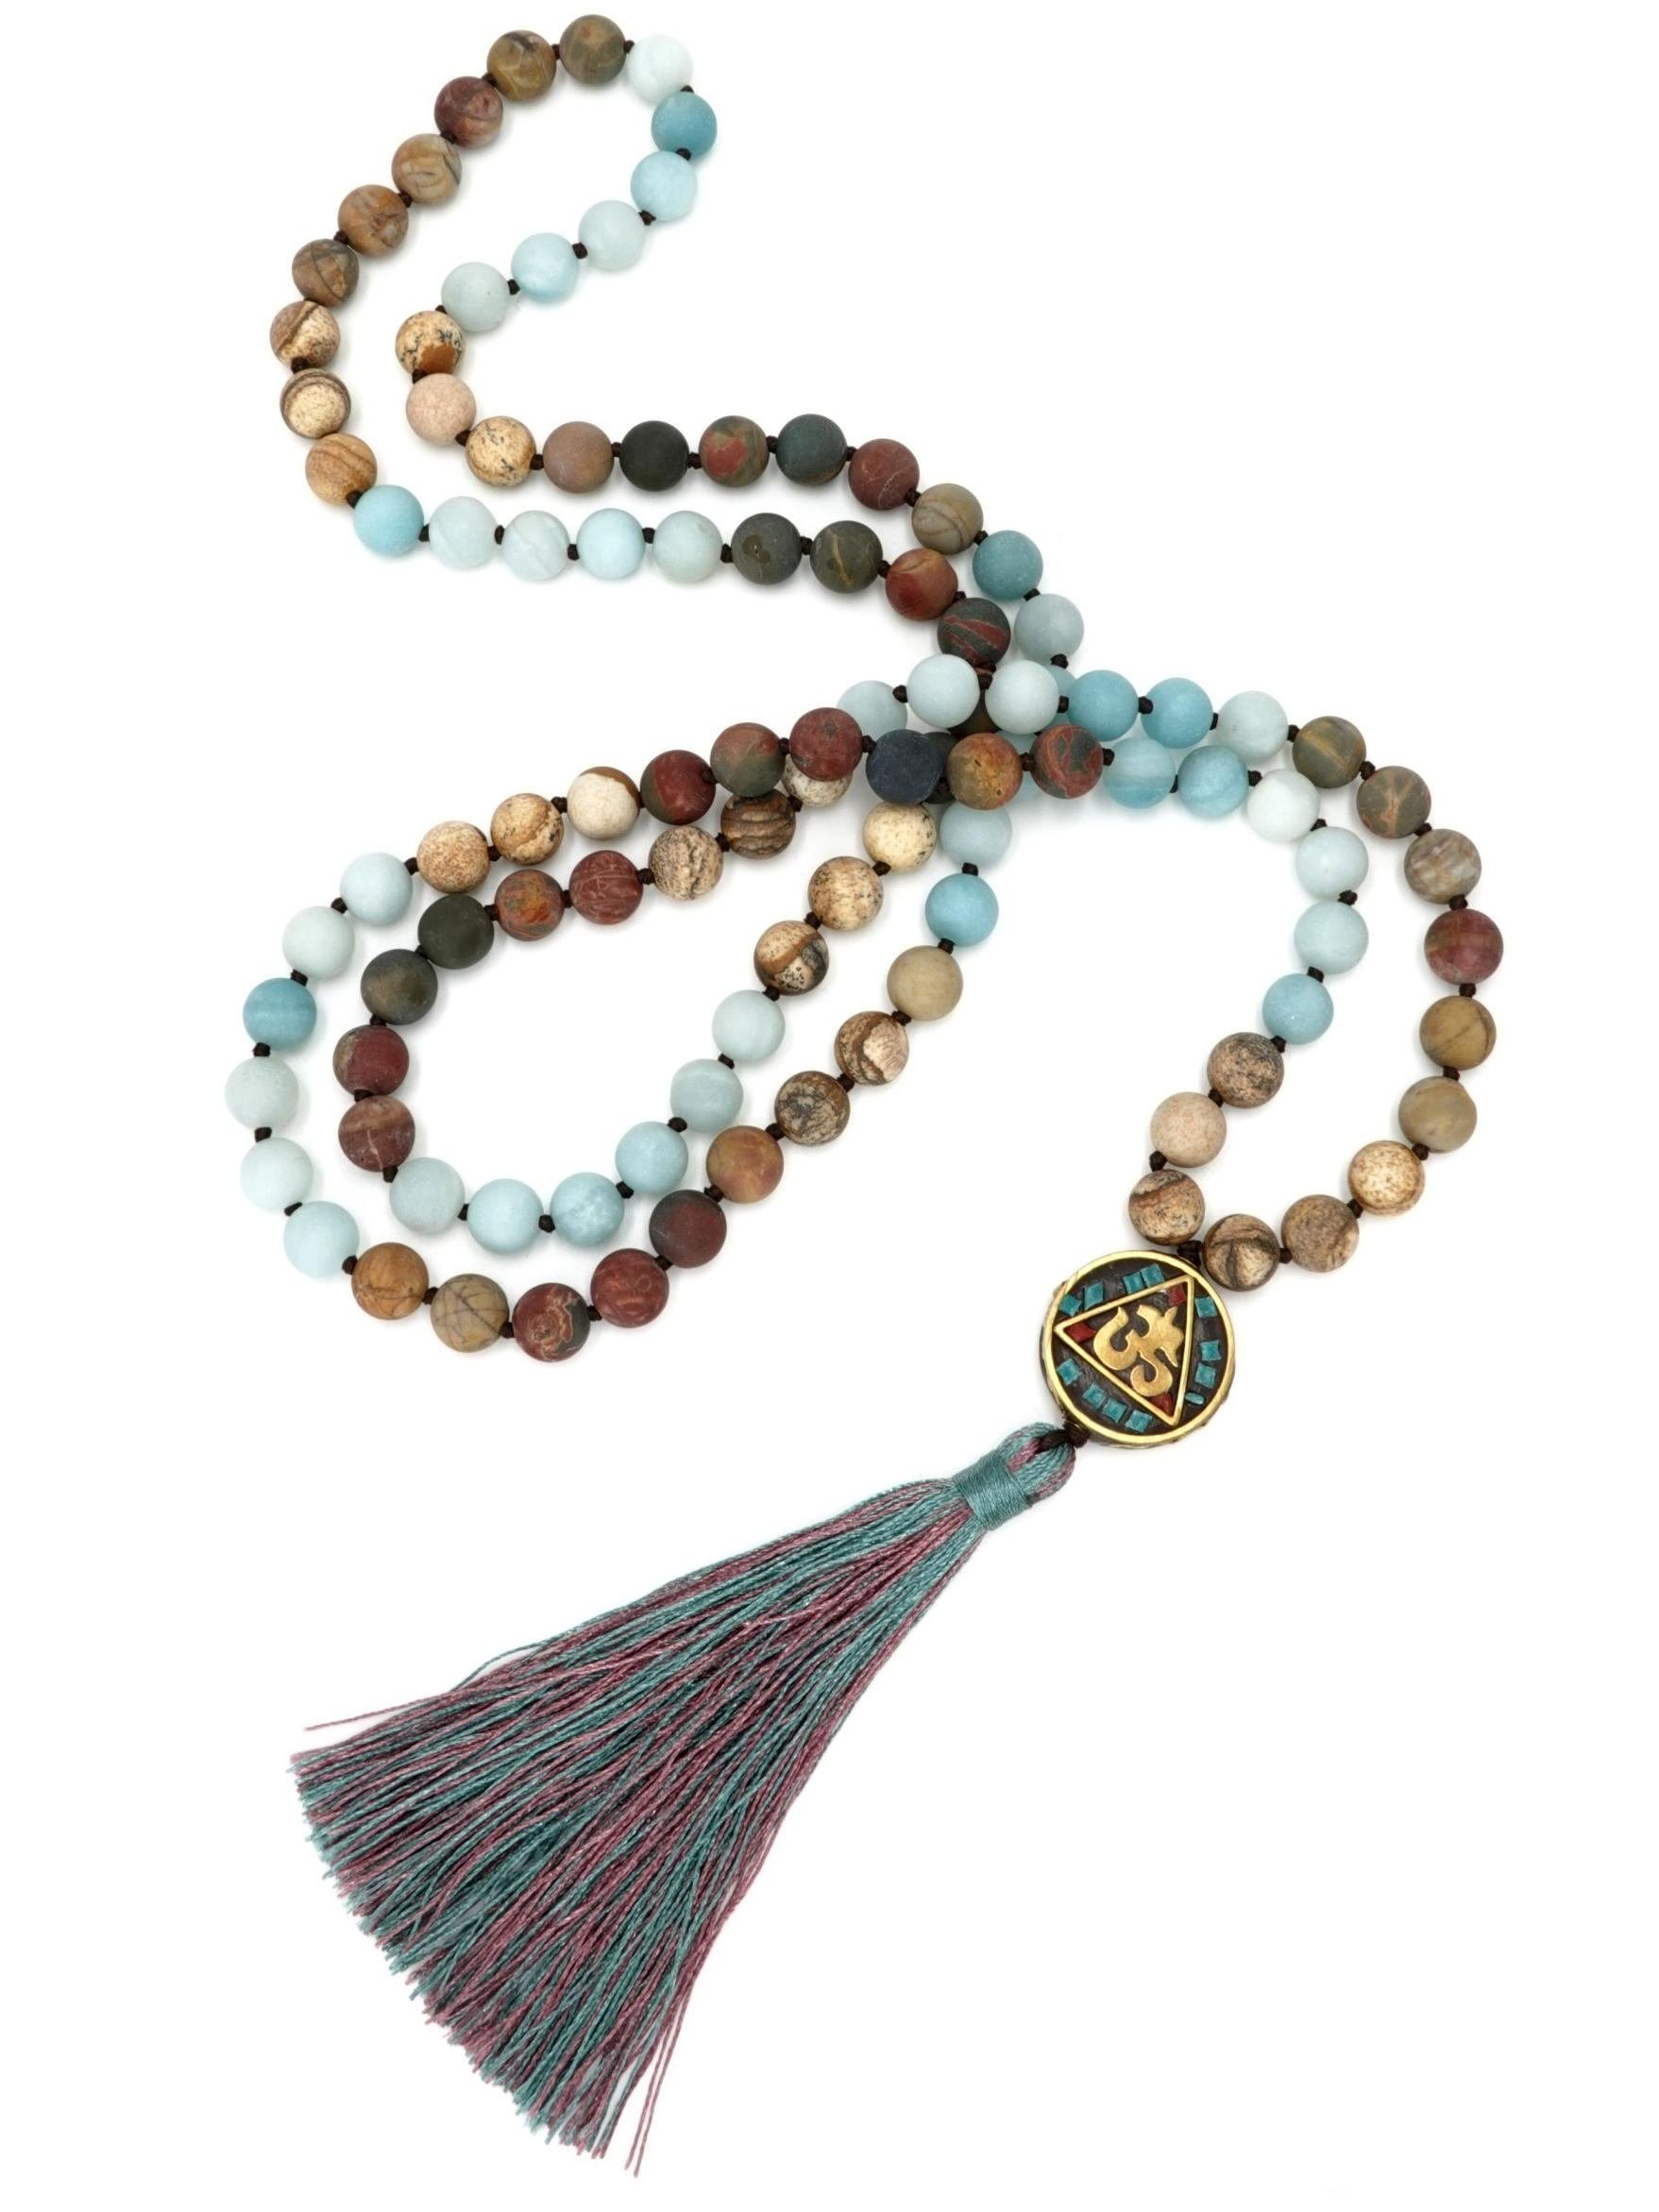 BENAVA Perlenkette »Mala Kette 108 Perlen - Amazonit Bunt«, Handgemacht  online kaufen | OTTO